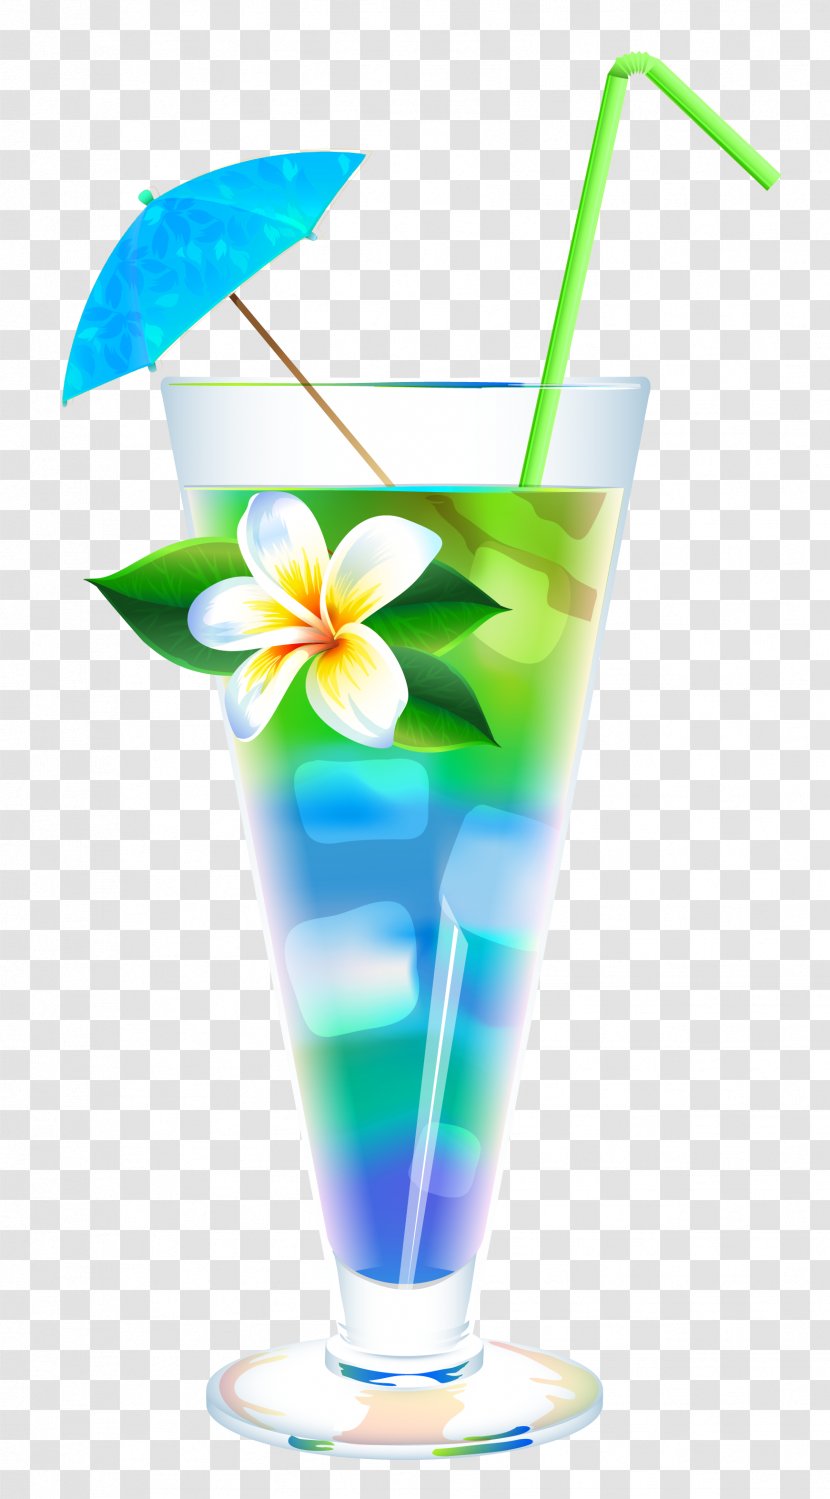 Cocktail Tequila Sunrise Martini Cosmopolitan Milkshake - Drink Transparent PNG